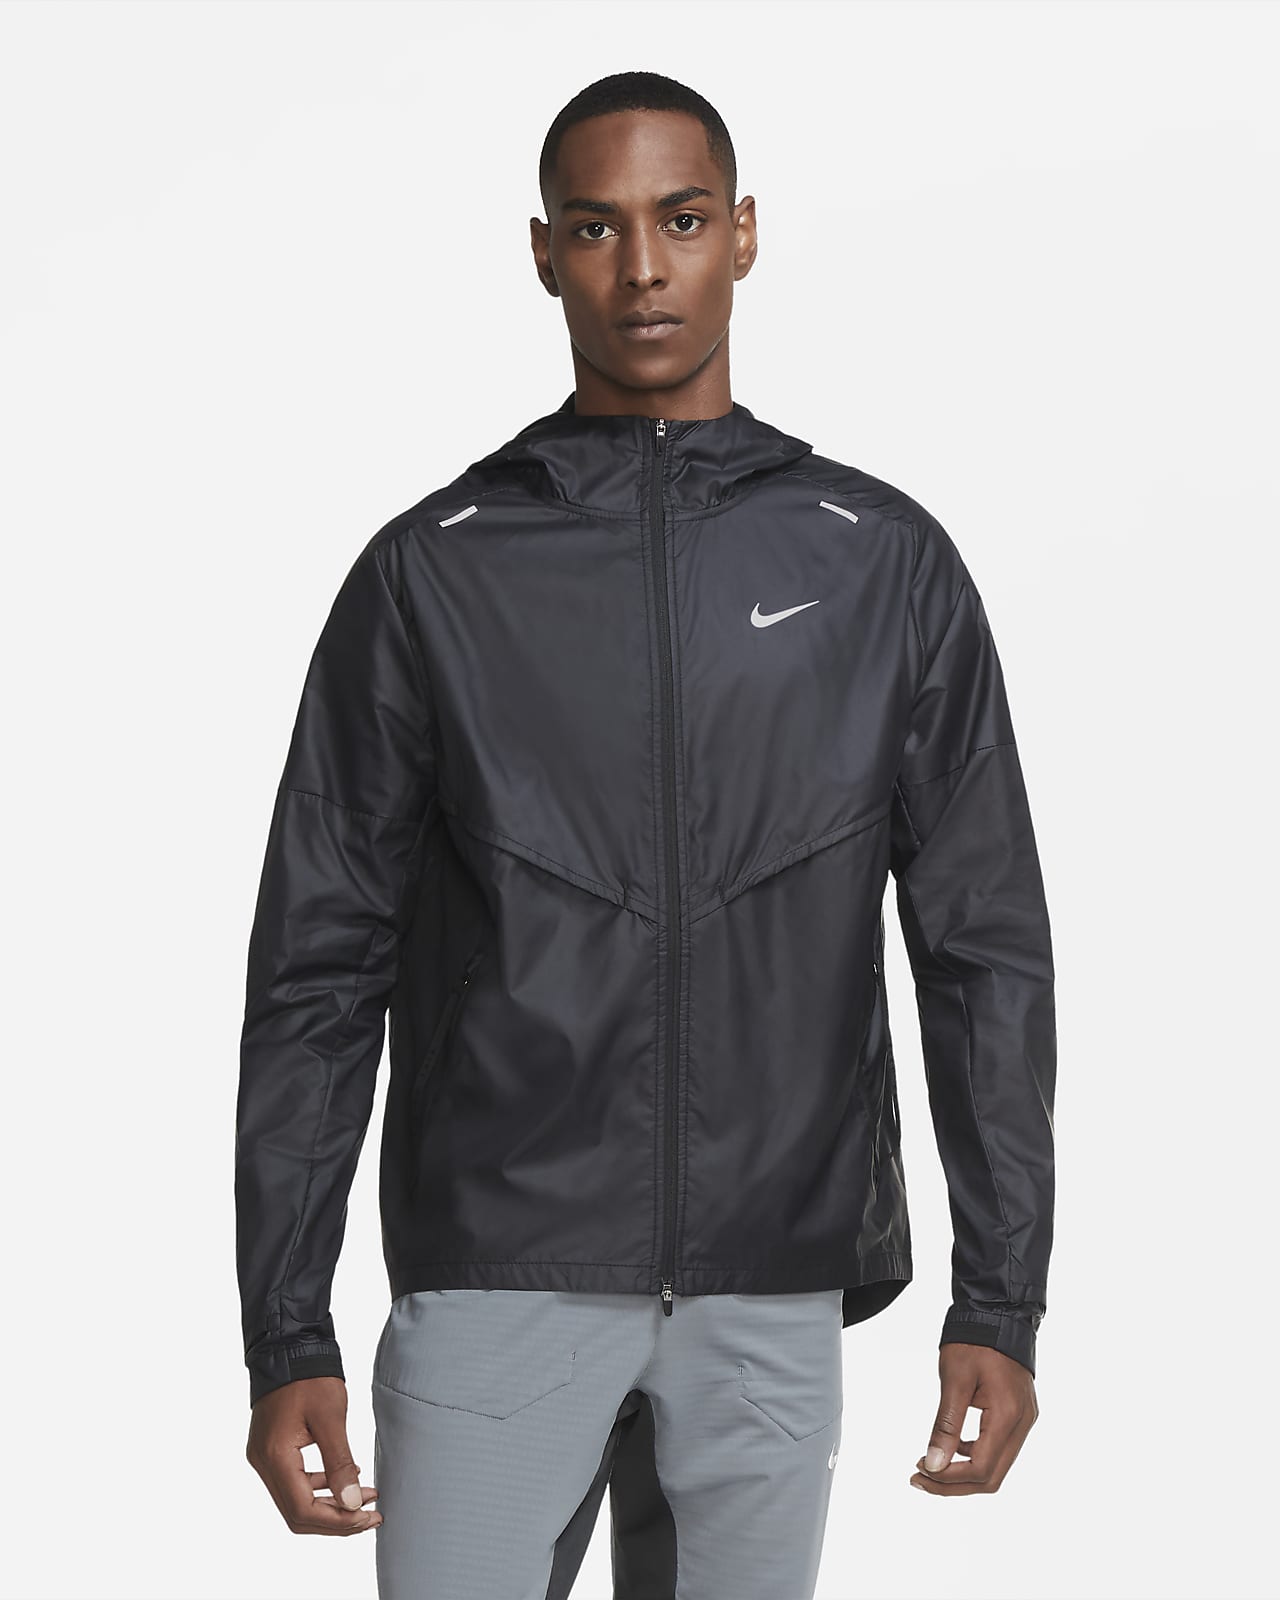 Theseus invoer gebruiker Nike Shield Elite Jacket Dubai, SAVE 52% - mpgc.net